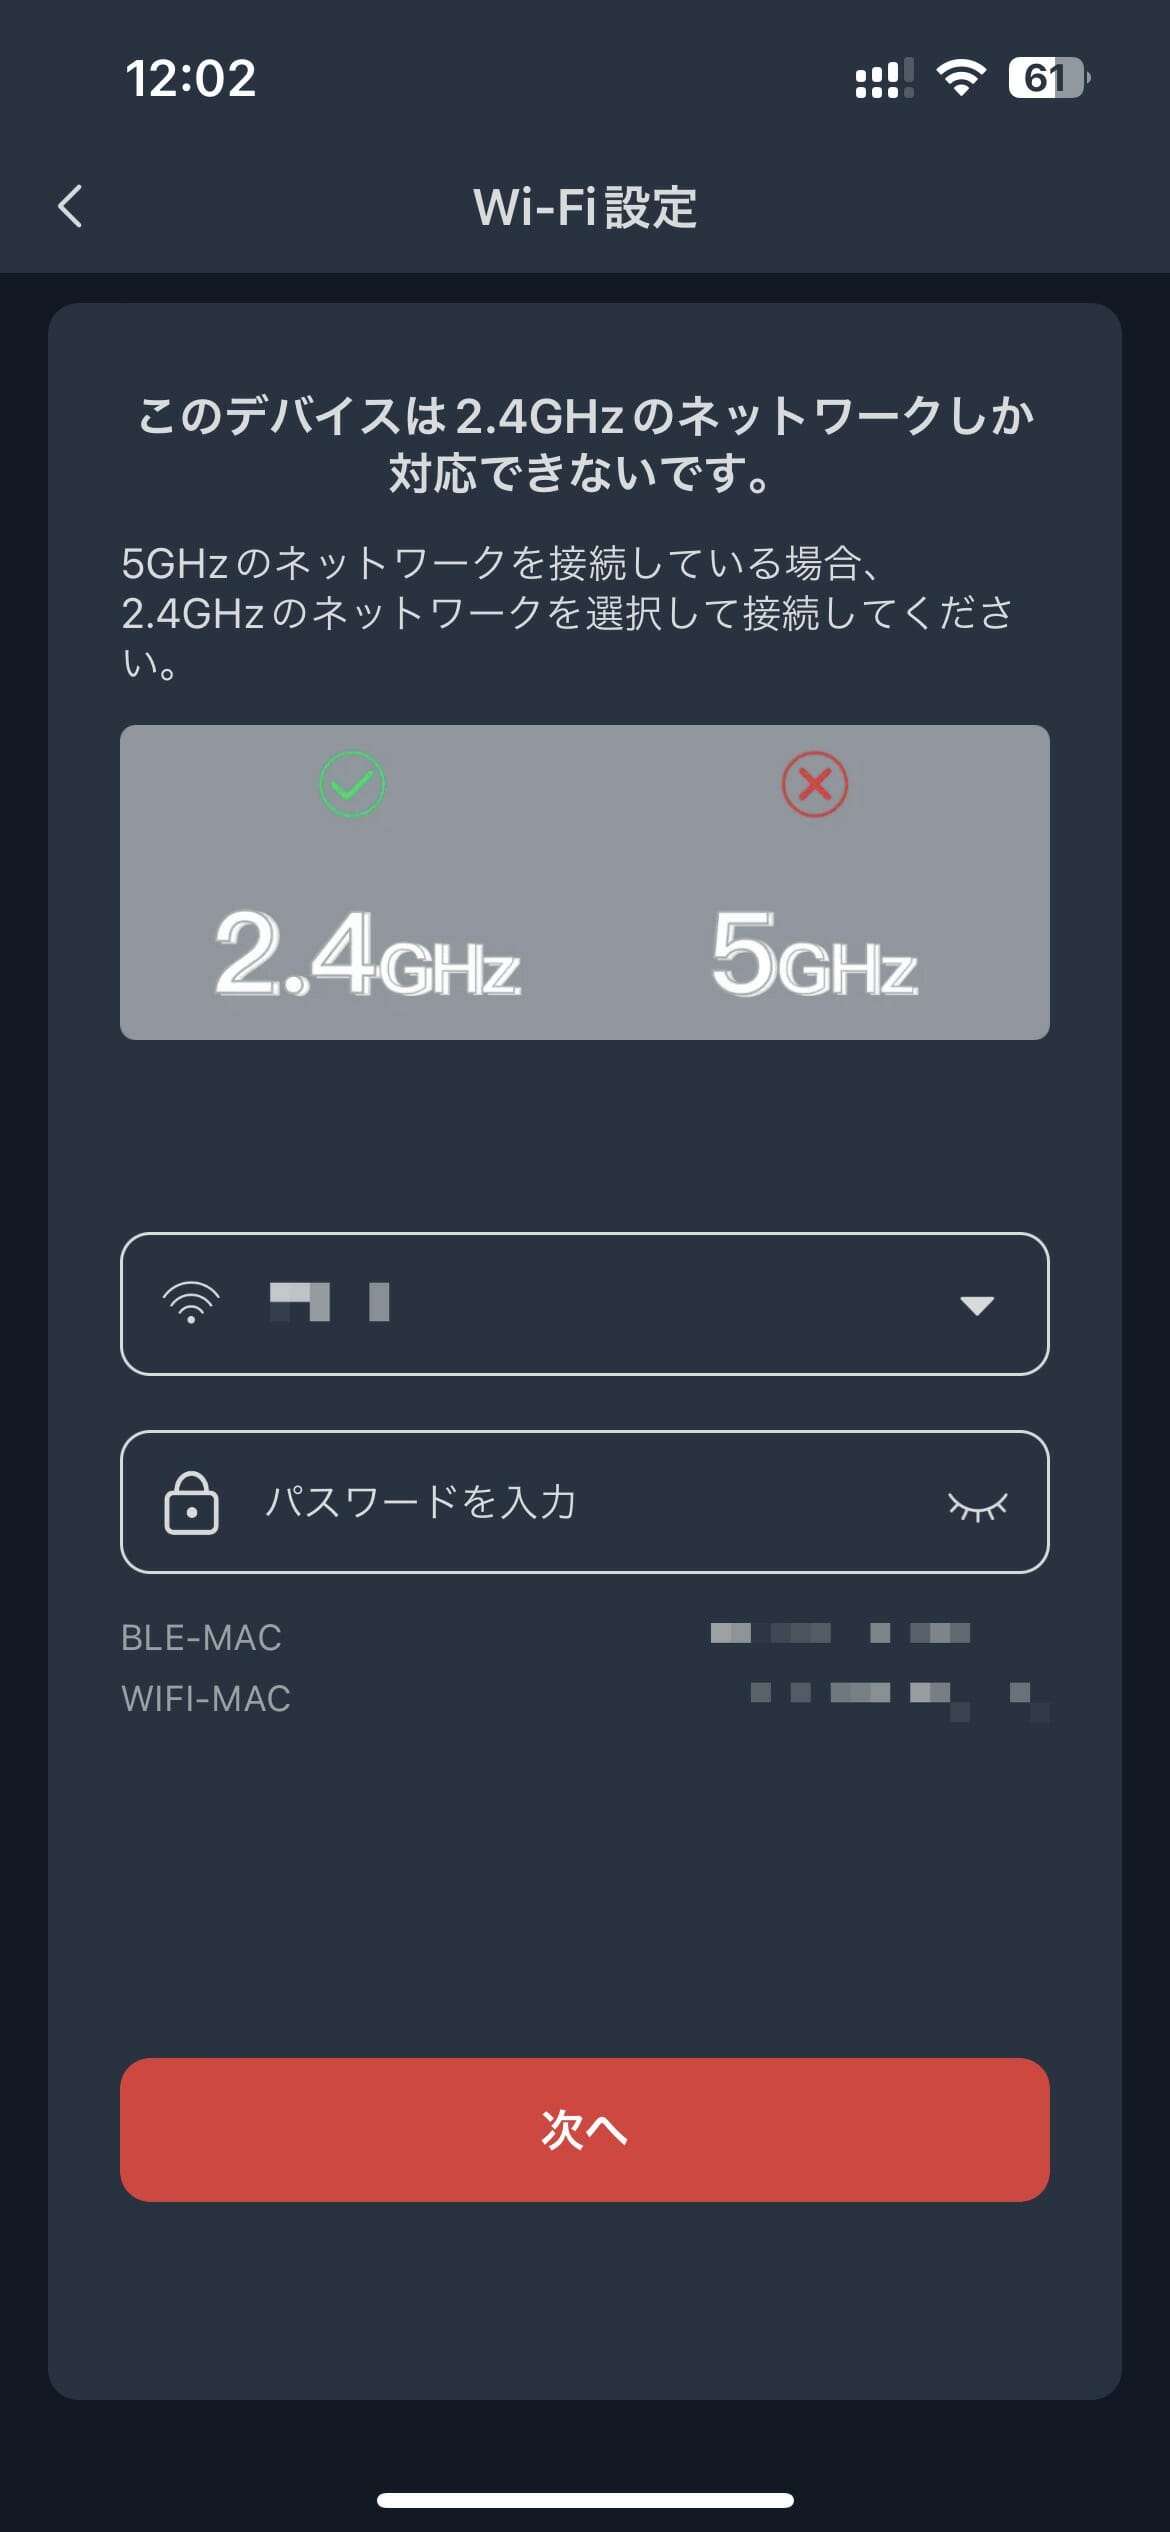 Wi-Fi設定は2.4GHzのみ対応。